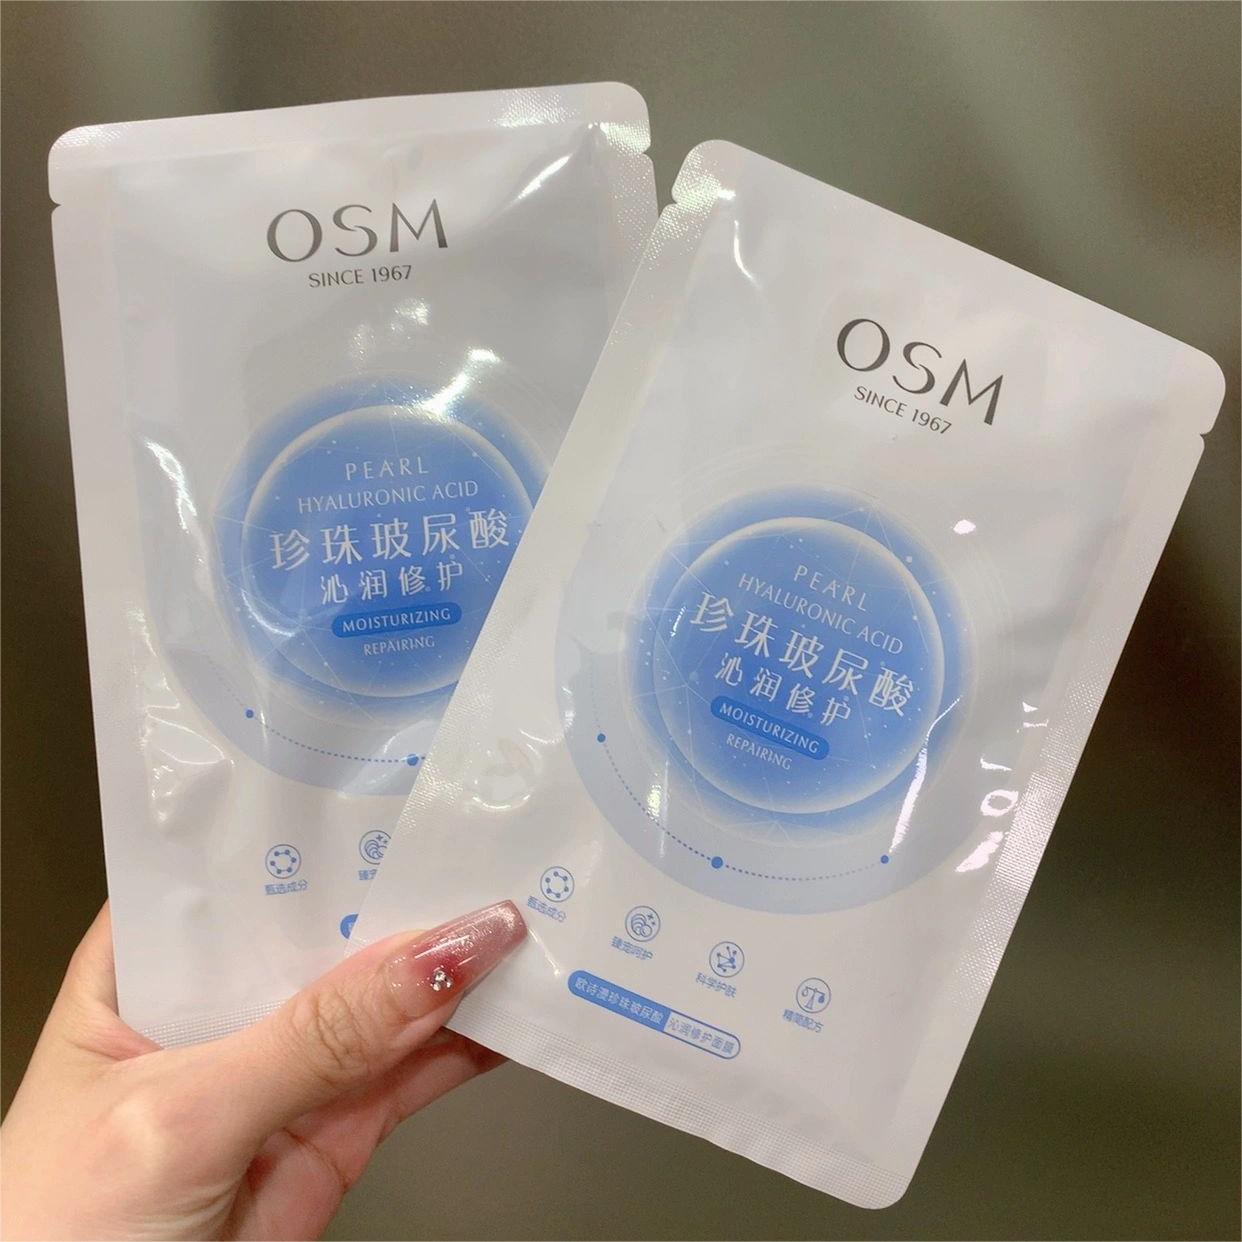 OSM Pearl Hyaluronic Acid Moisturizing Repairing Mask 28pcs 欧诗漫珍珠玻尿酸沁润修护面膜